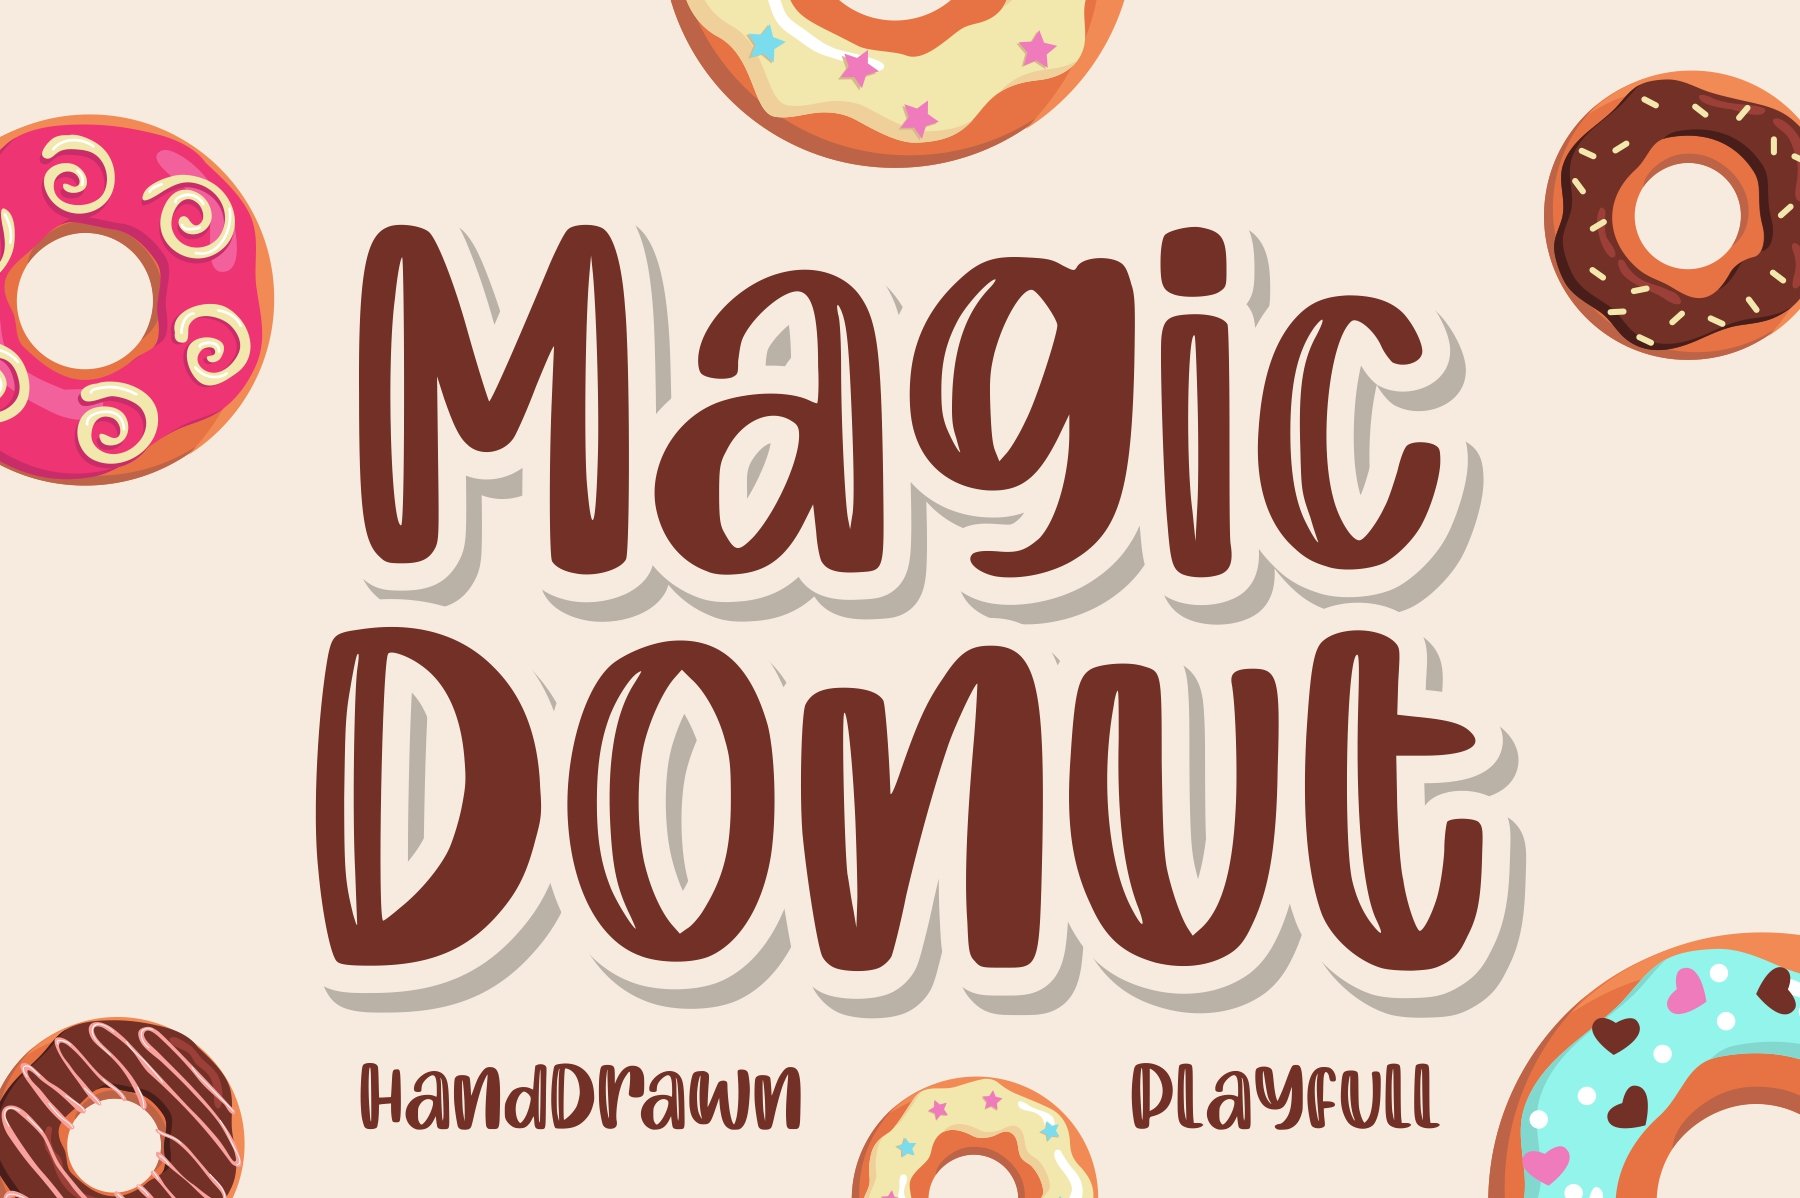 Magic Donut | Playfull Handdrawn cover image.